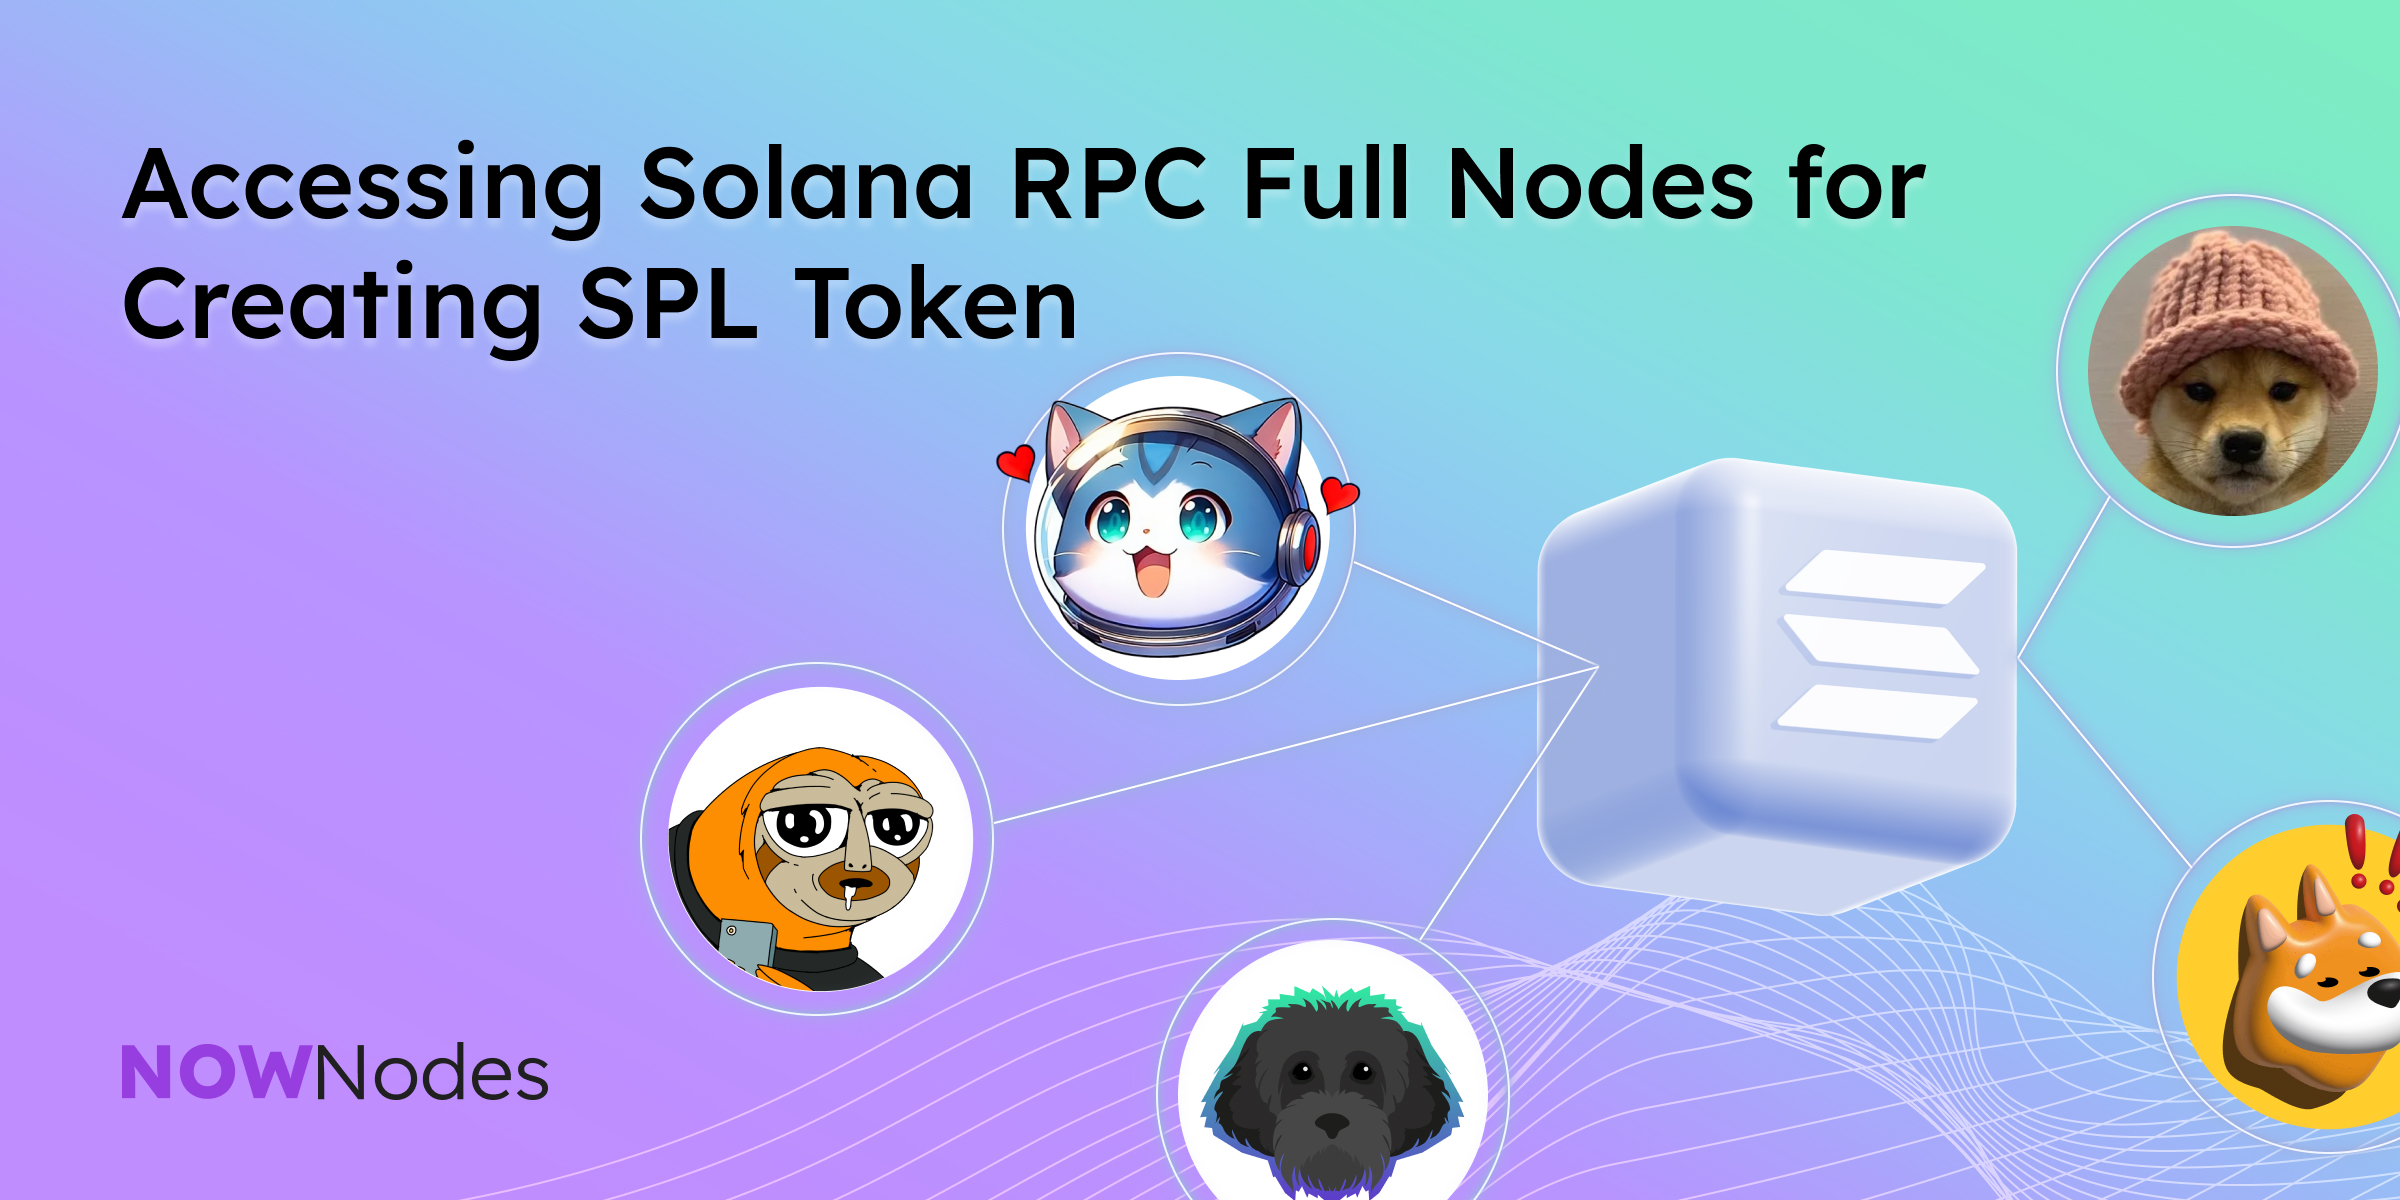 Accessing Solana RPC Full Nodes for Creating SPL Token
NOWNodes